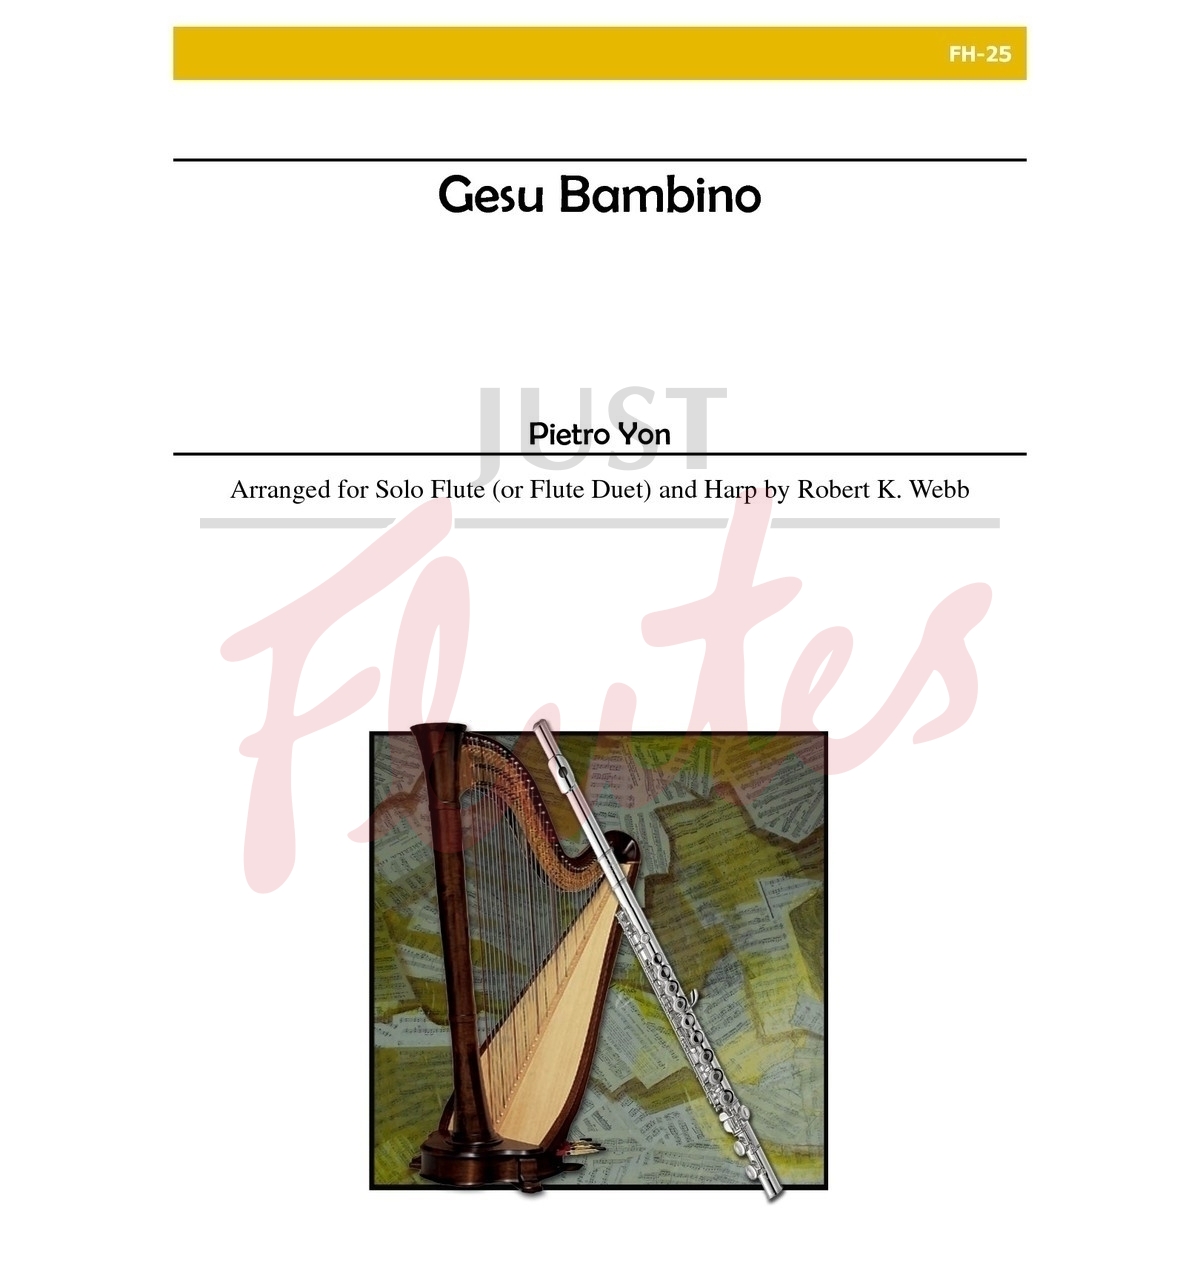 Gesu Bambino for Flute and Harp